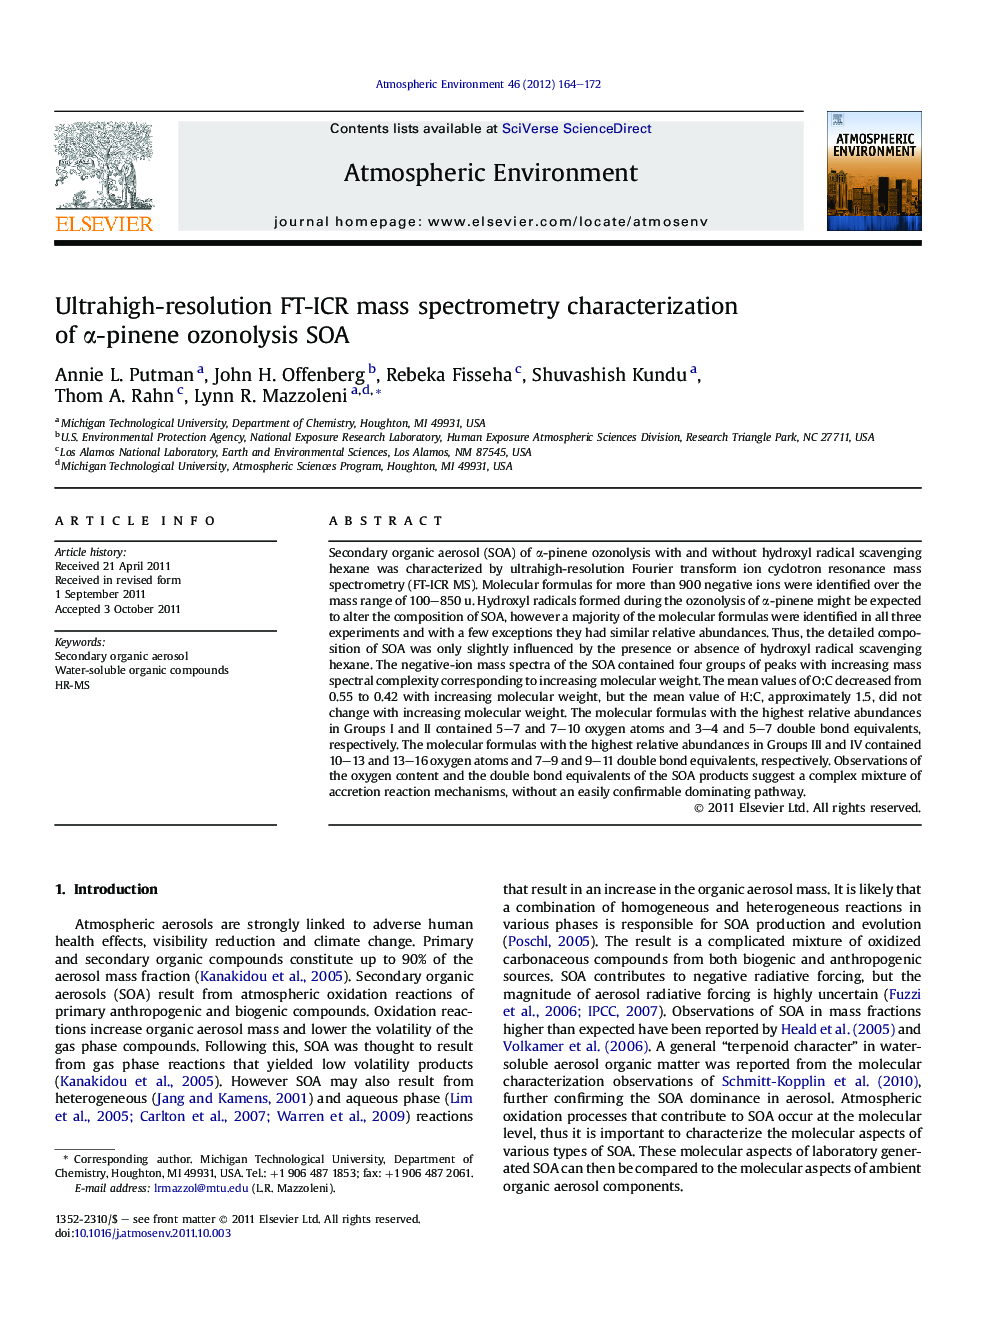 Ultrahigh-resolution FT-ICR mass spectrometry characterization of α-pinene ozonolysis SOA